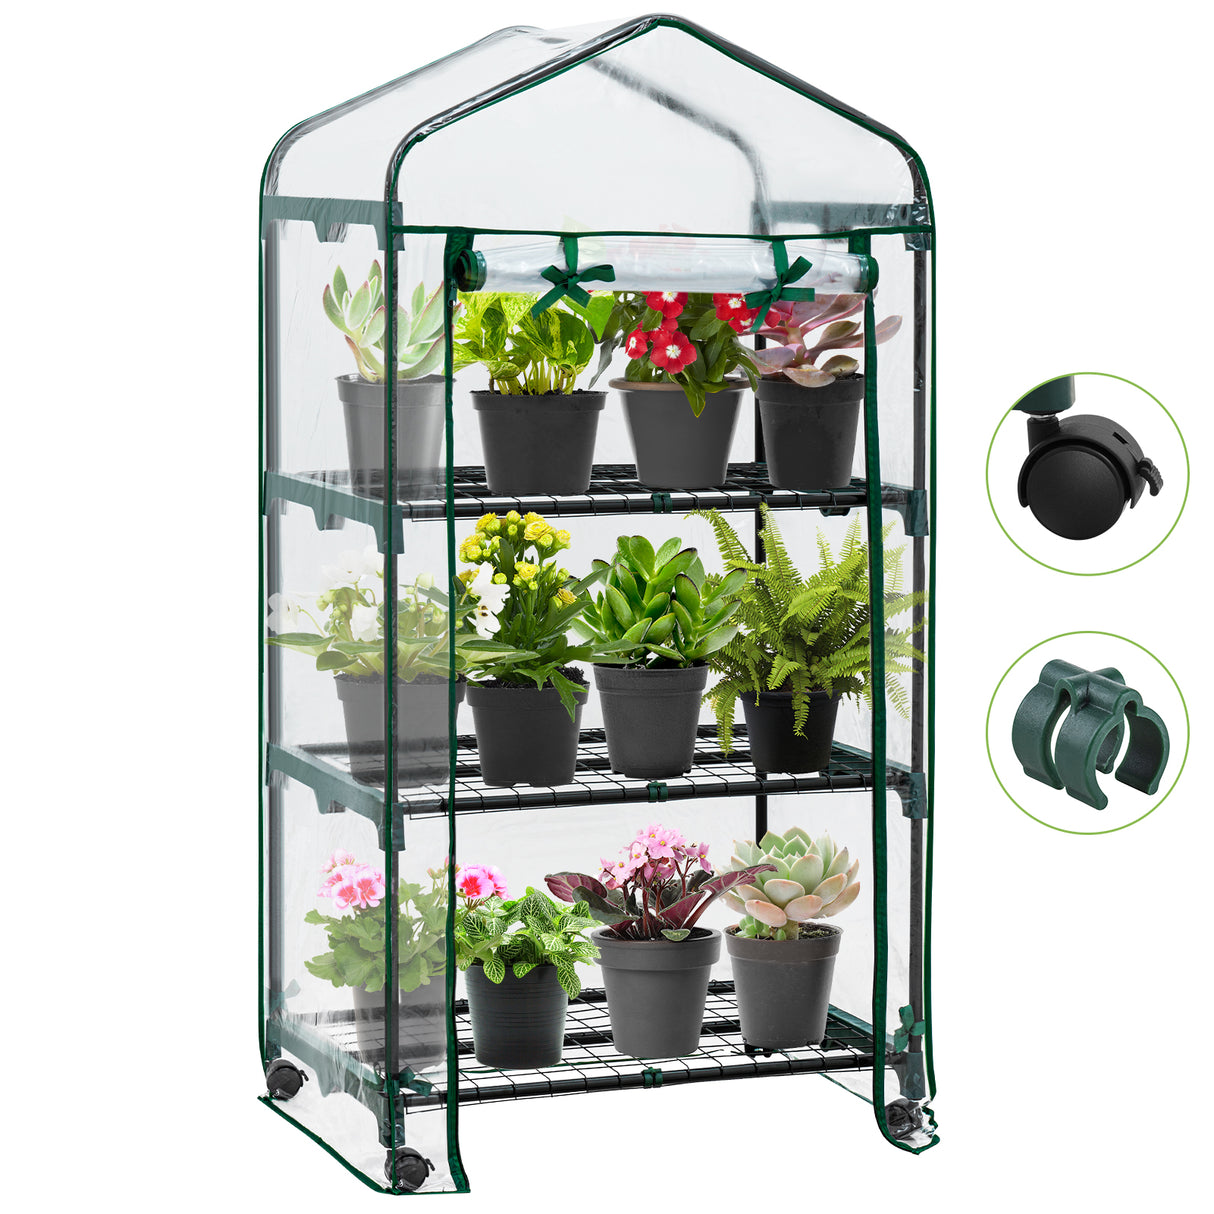 EAGLE PEAK Mini Rolling Greenhouse w/ Caster Wheels, 3-Tier or 4-Tier Portable Rack Shelves